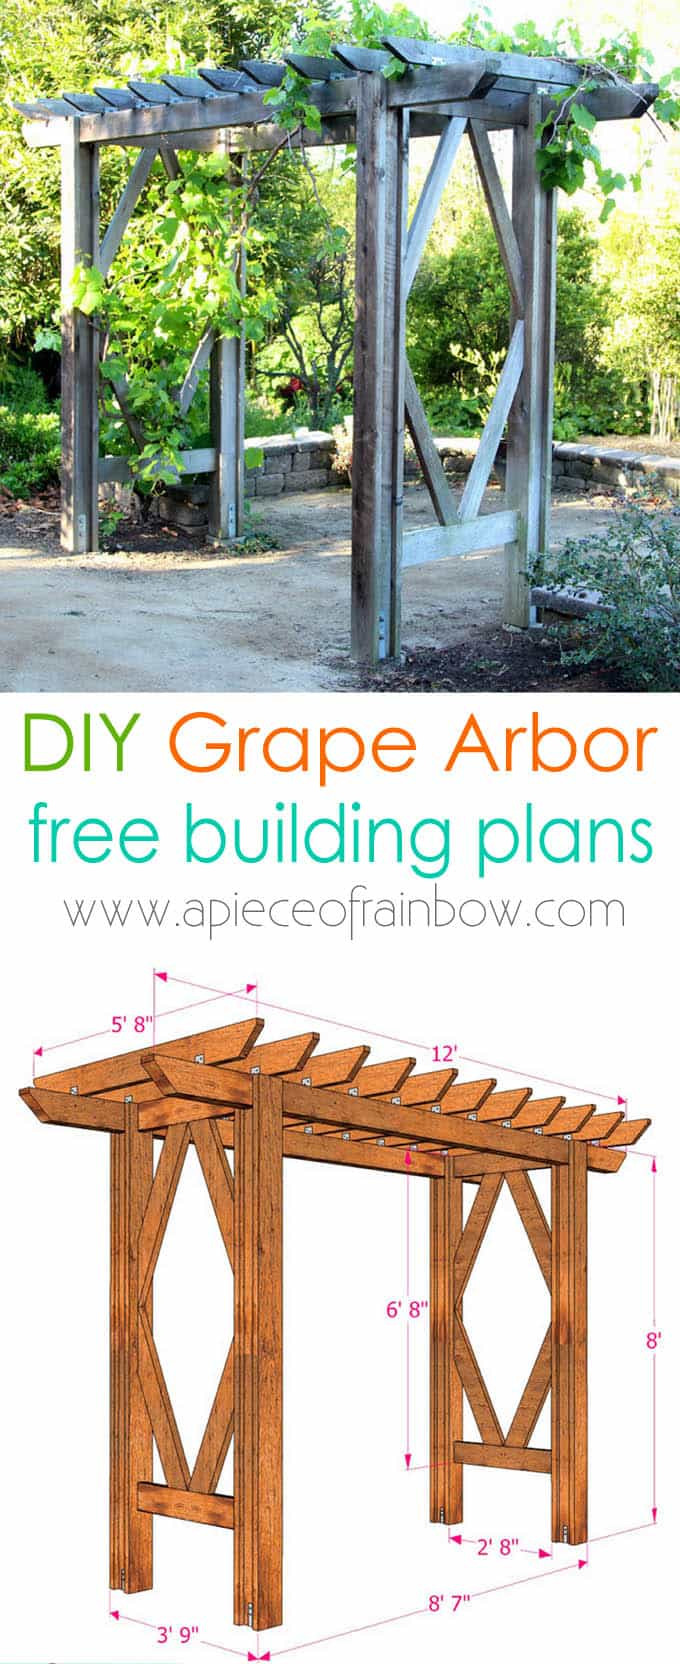 Best ideas about DIY Grape Arbor Plans
. Save or Pin DIY Grape Arbor Simple DIY Pergola Free Building Plan Now.